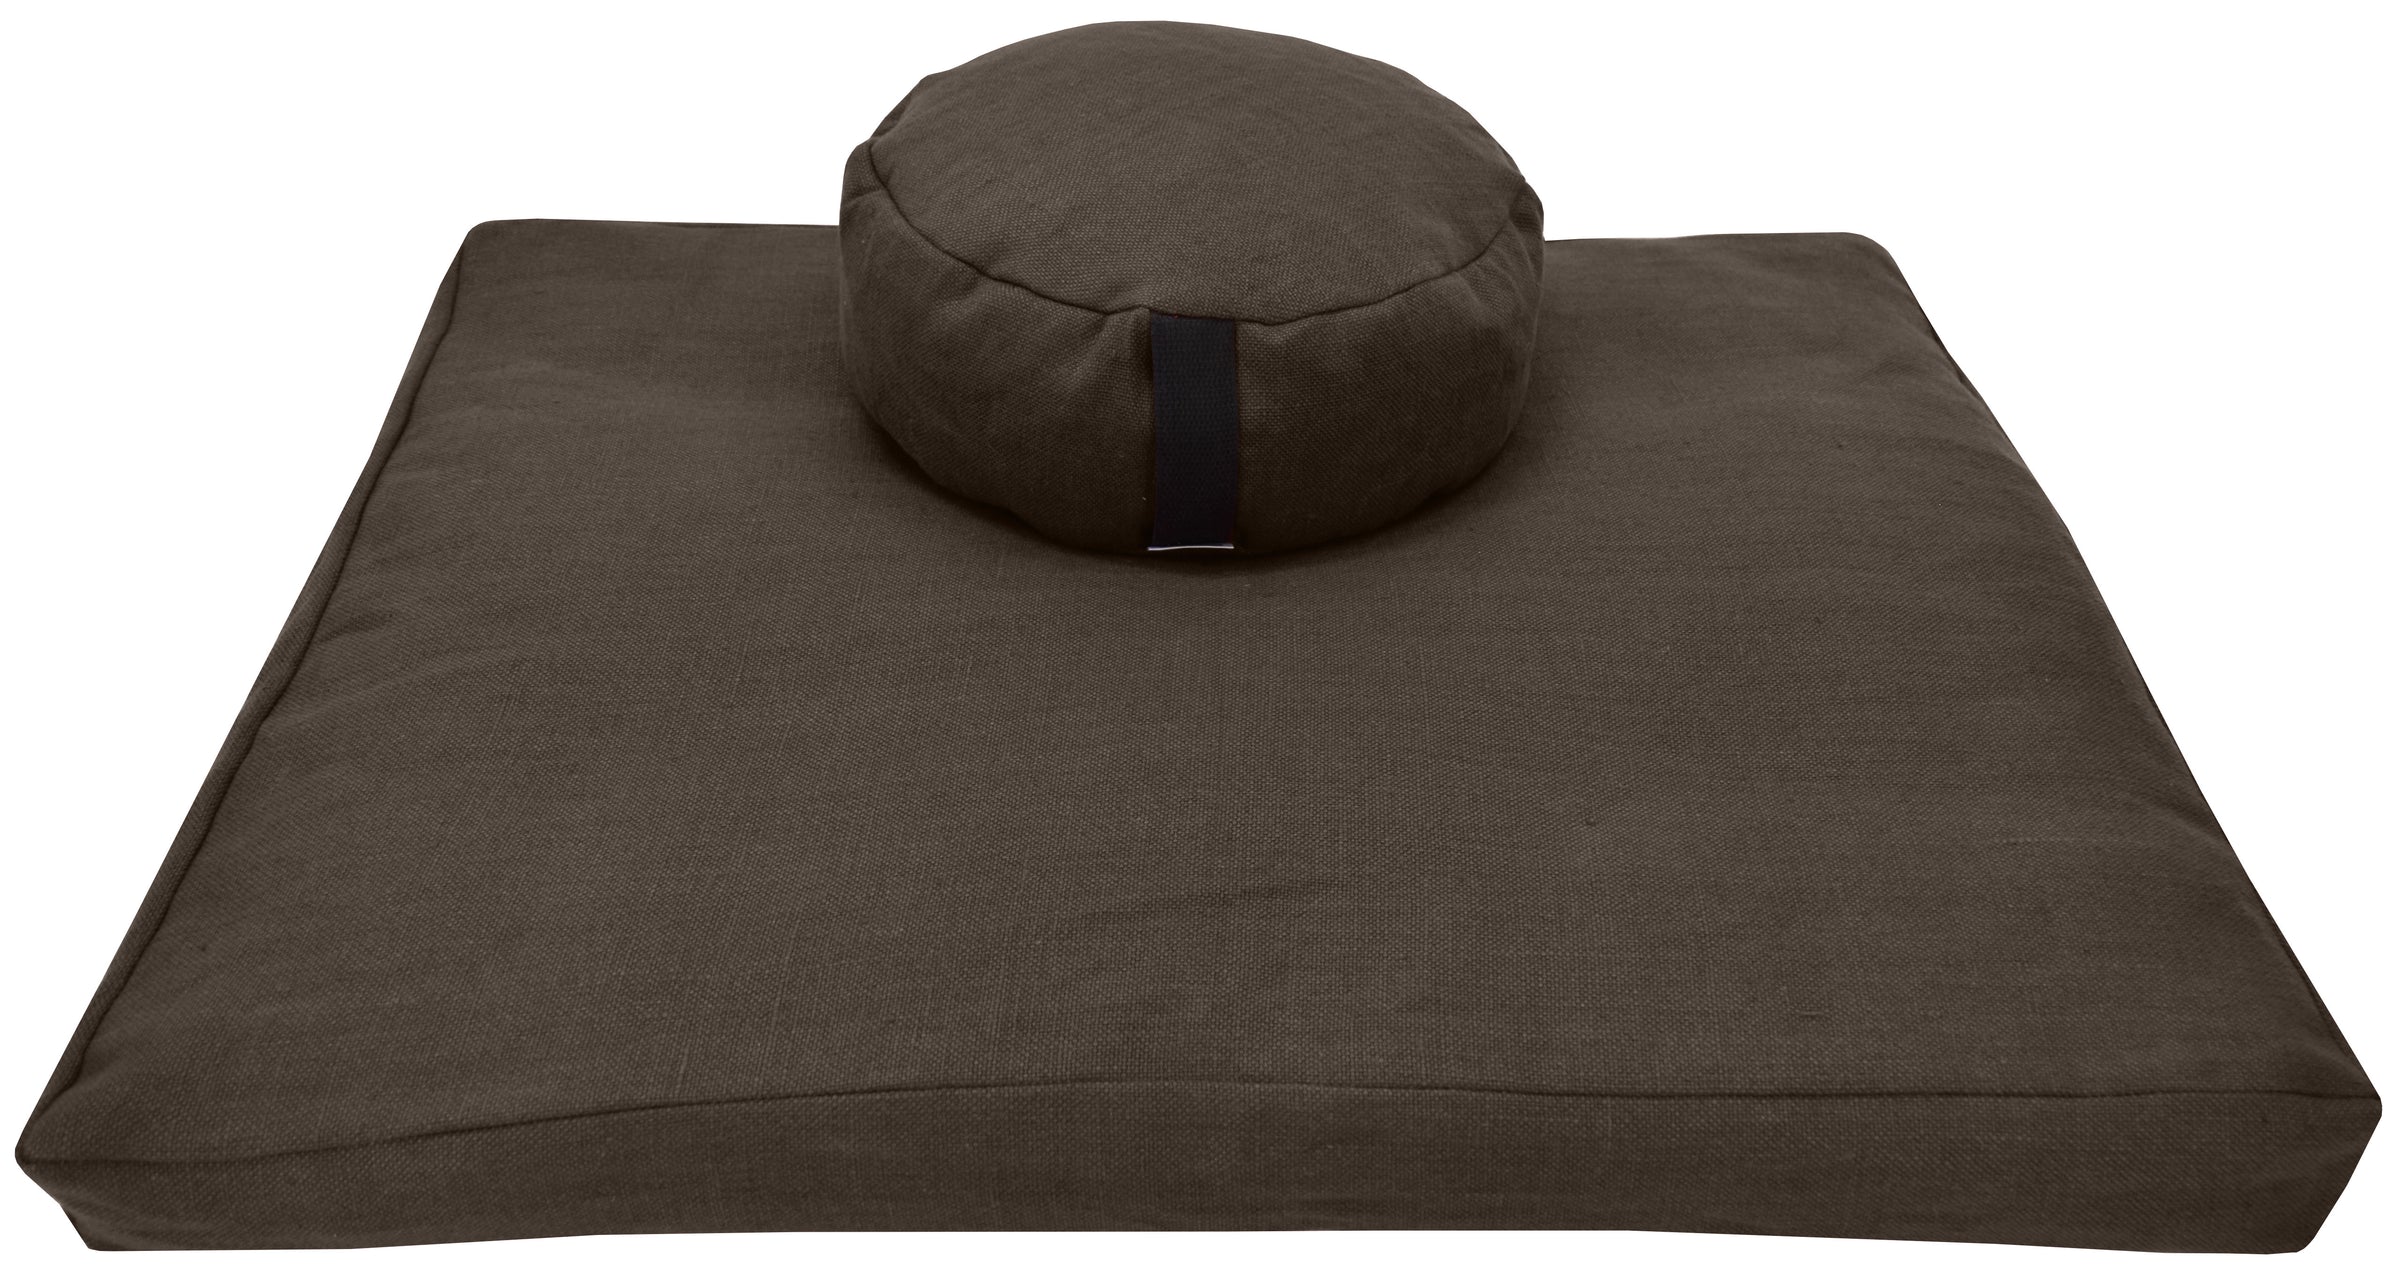 Meditation Cushions - Cottoned Shop